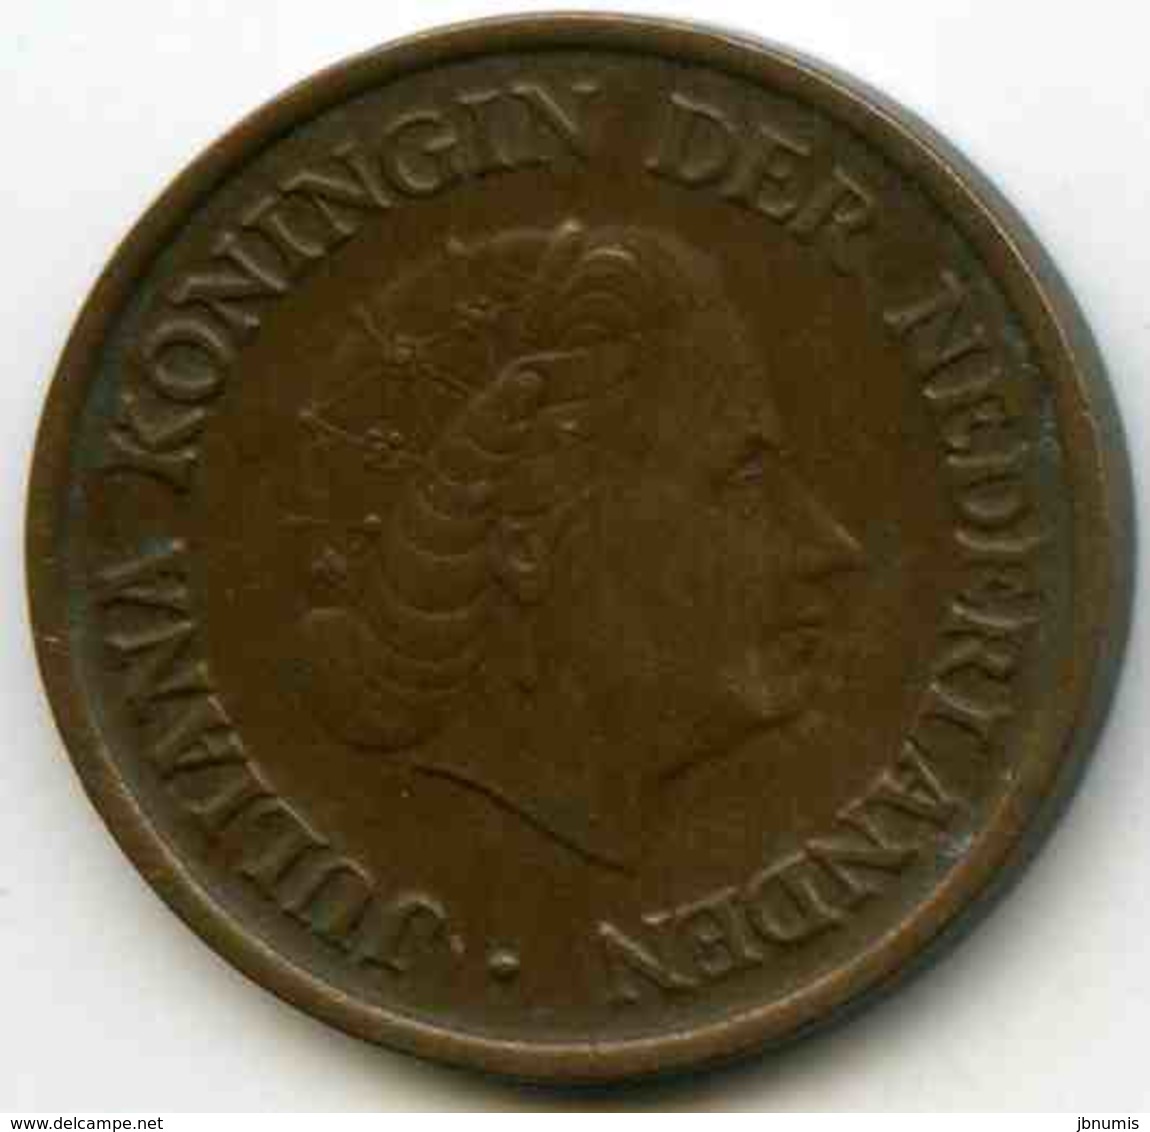 Pays-Bas Netherland 5 Cents 1950 KM 181 - 1948-1980 : Juliana